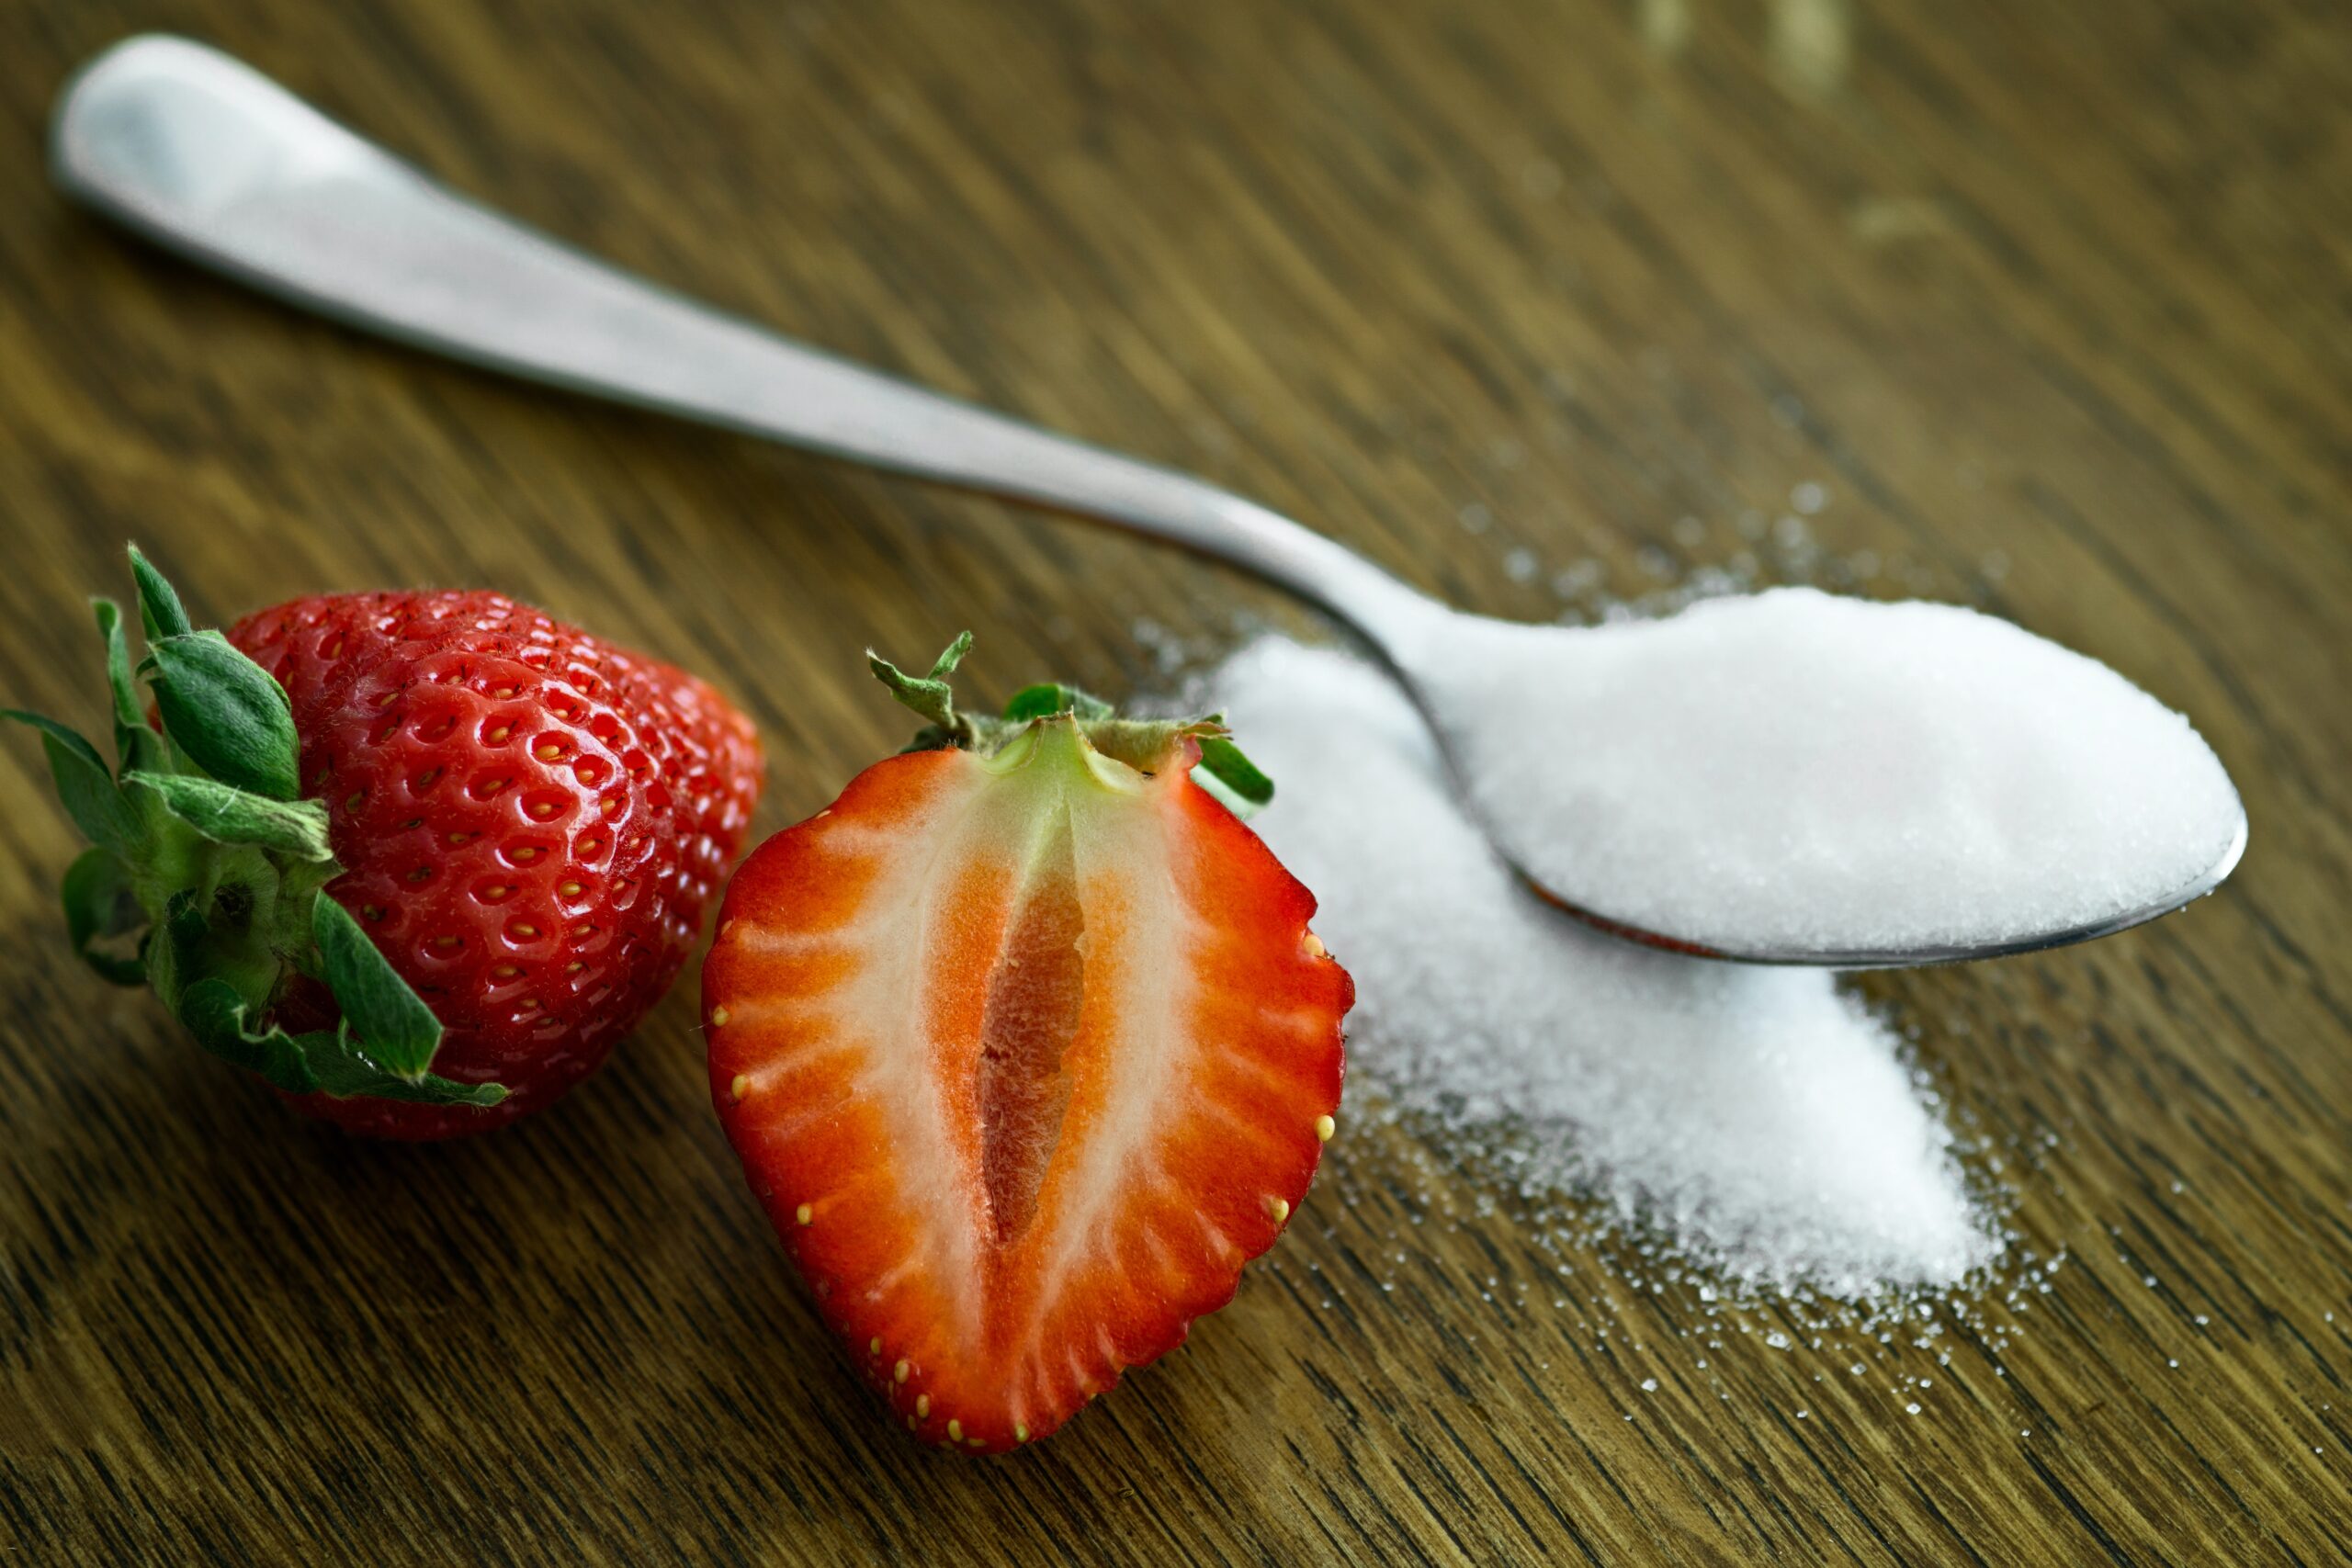 teaspoon of sugar and strawberry